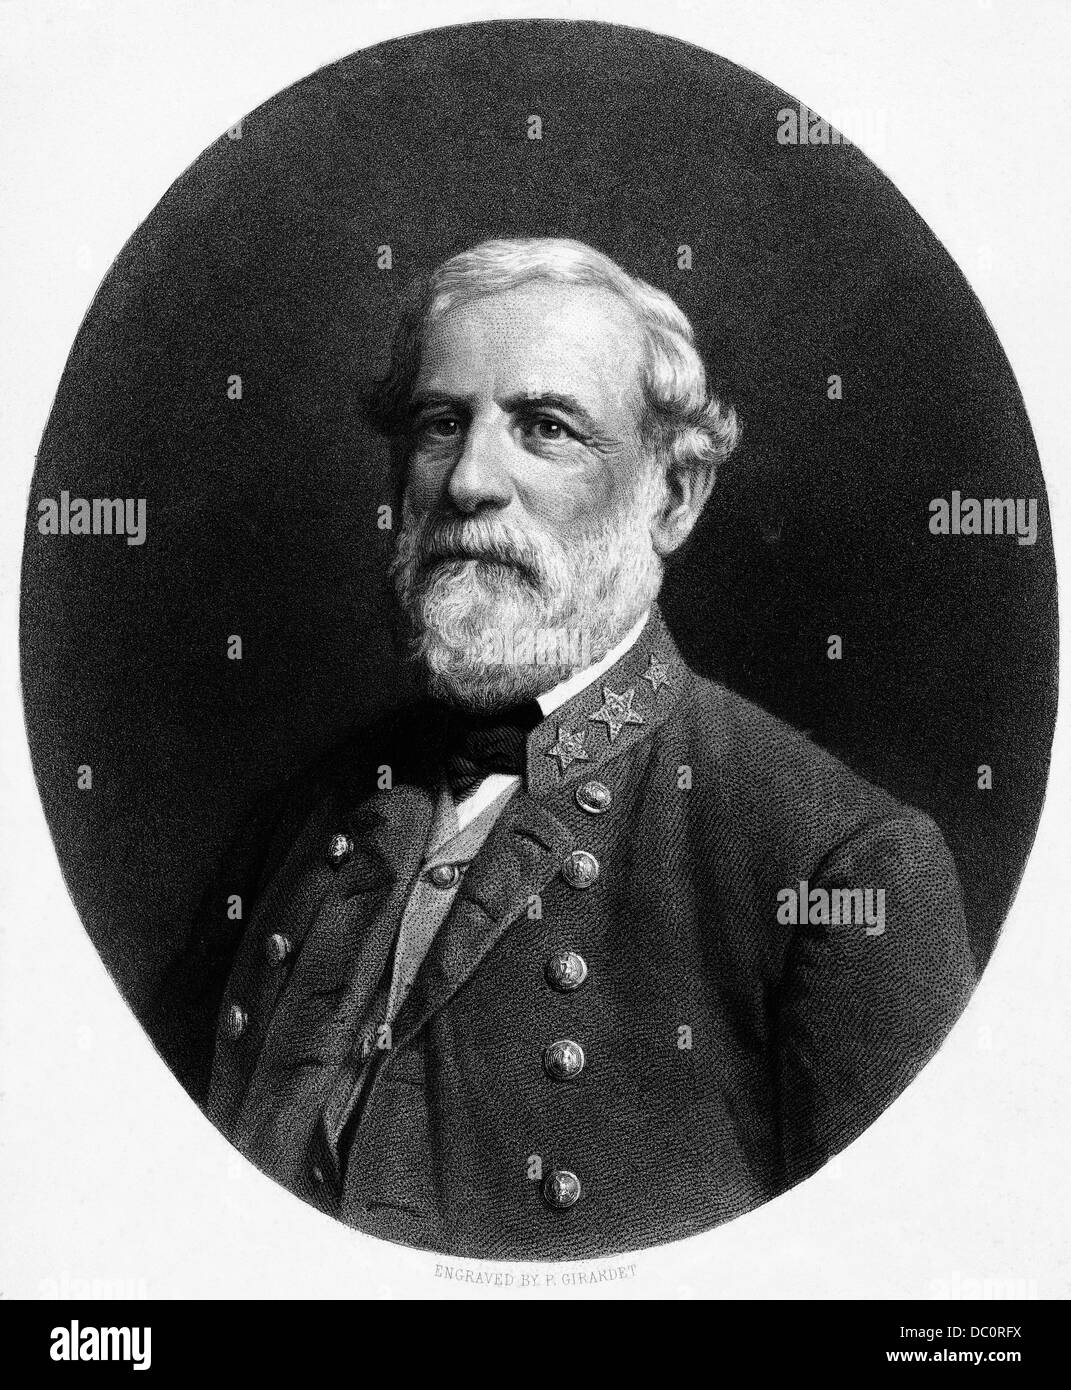 1800s 1860s PORTRAIT OF ROBERT E LEE CONFEDERATE GENERAL DURING AMERICAN CIVIL WAR Stock Photo